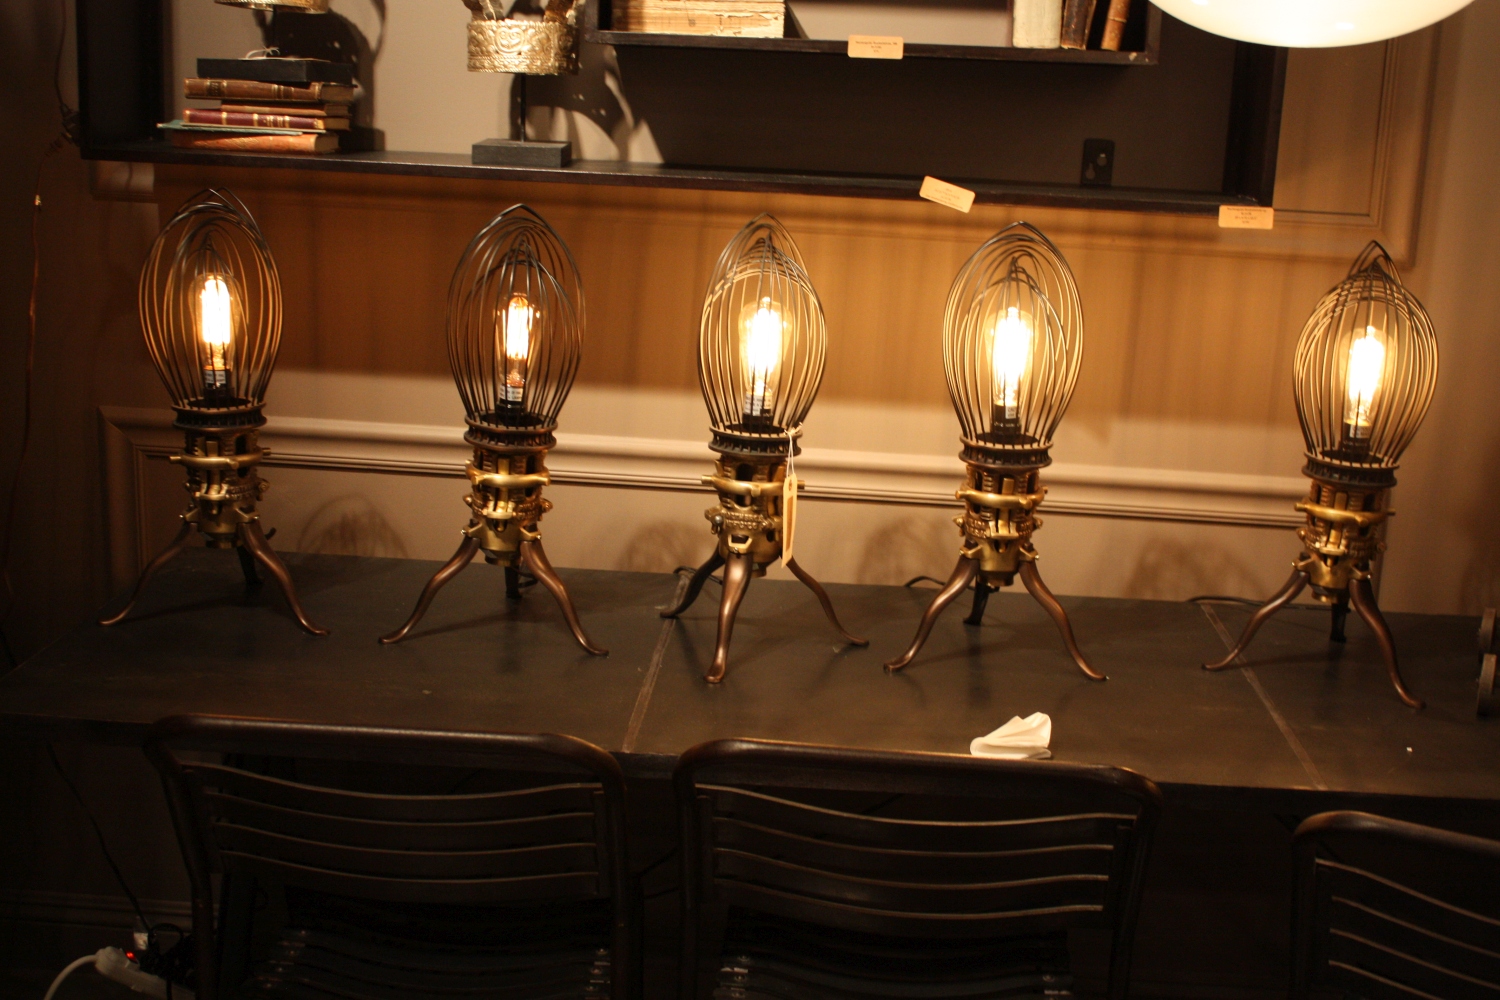 Atique-style lamps